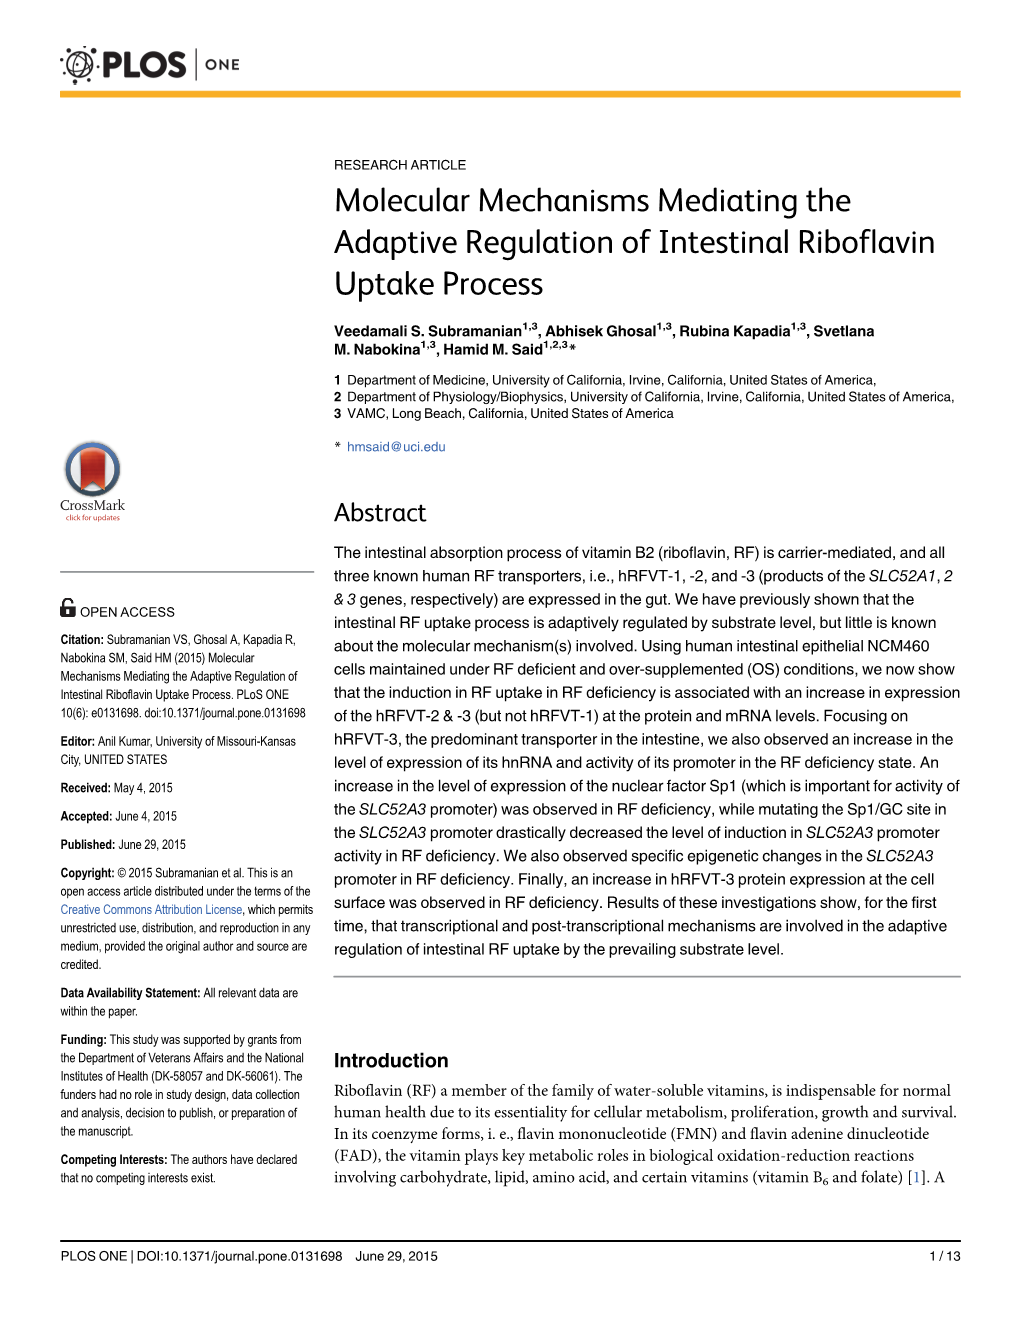 Molecular Mechanisms Mediating the Adaptive Regulation of Intestinal Riboflavin Uptake Process